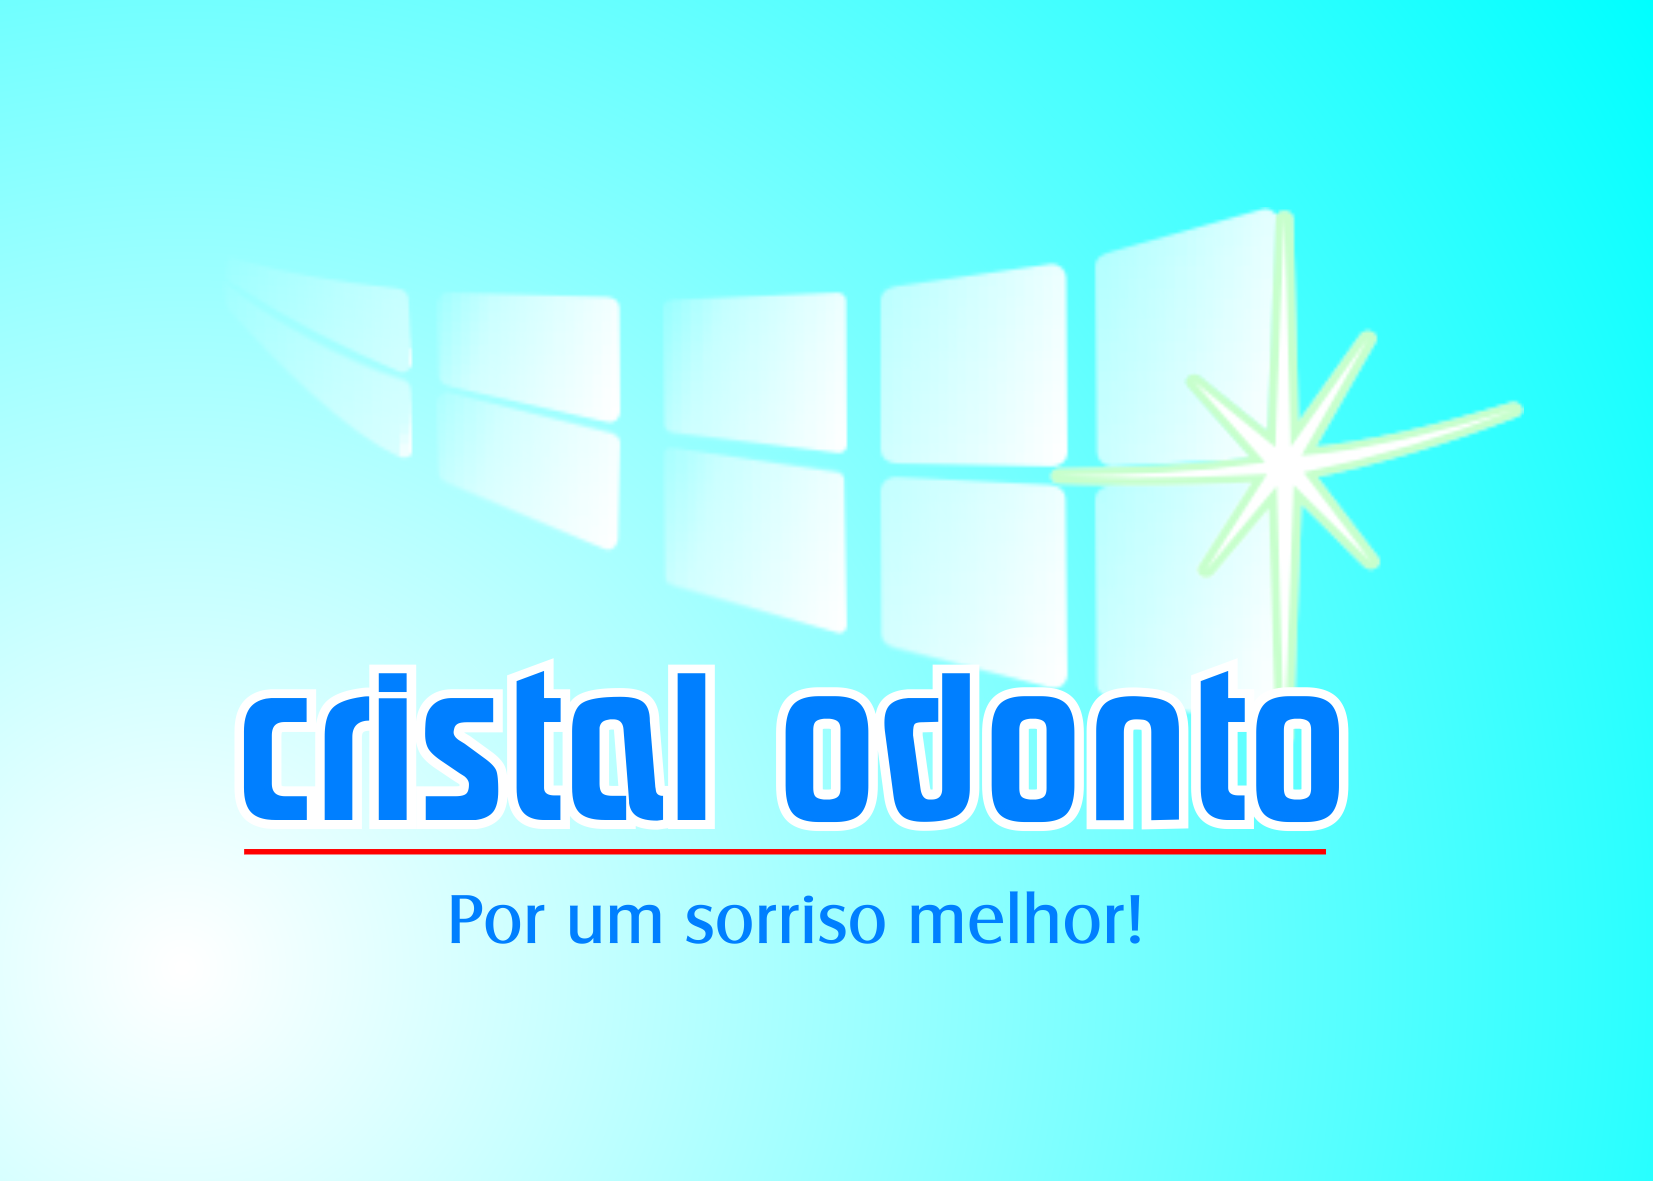 CRISTAL ODONTO logo